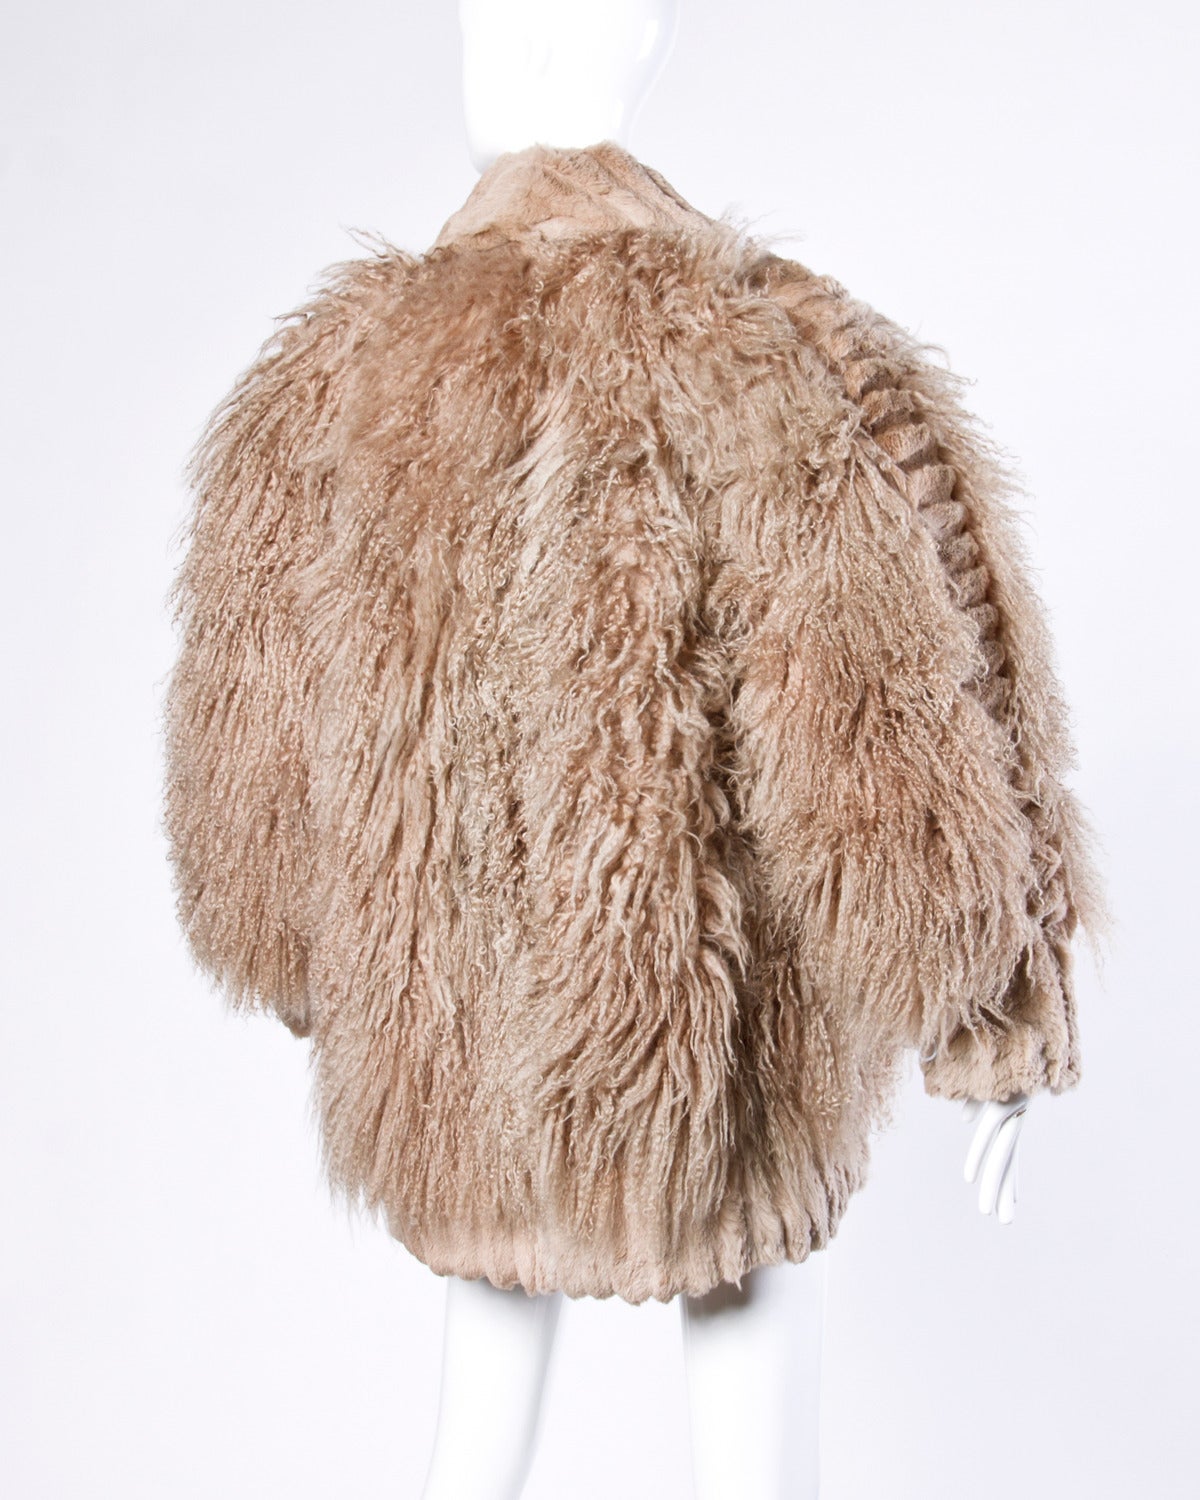 Vintage Dyed Brown Long Shaggy Curly Tibetan or Mongolian Lamb Fur Coat ...